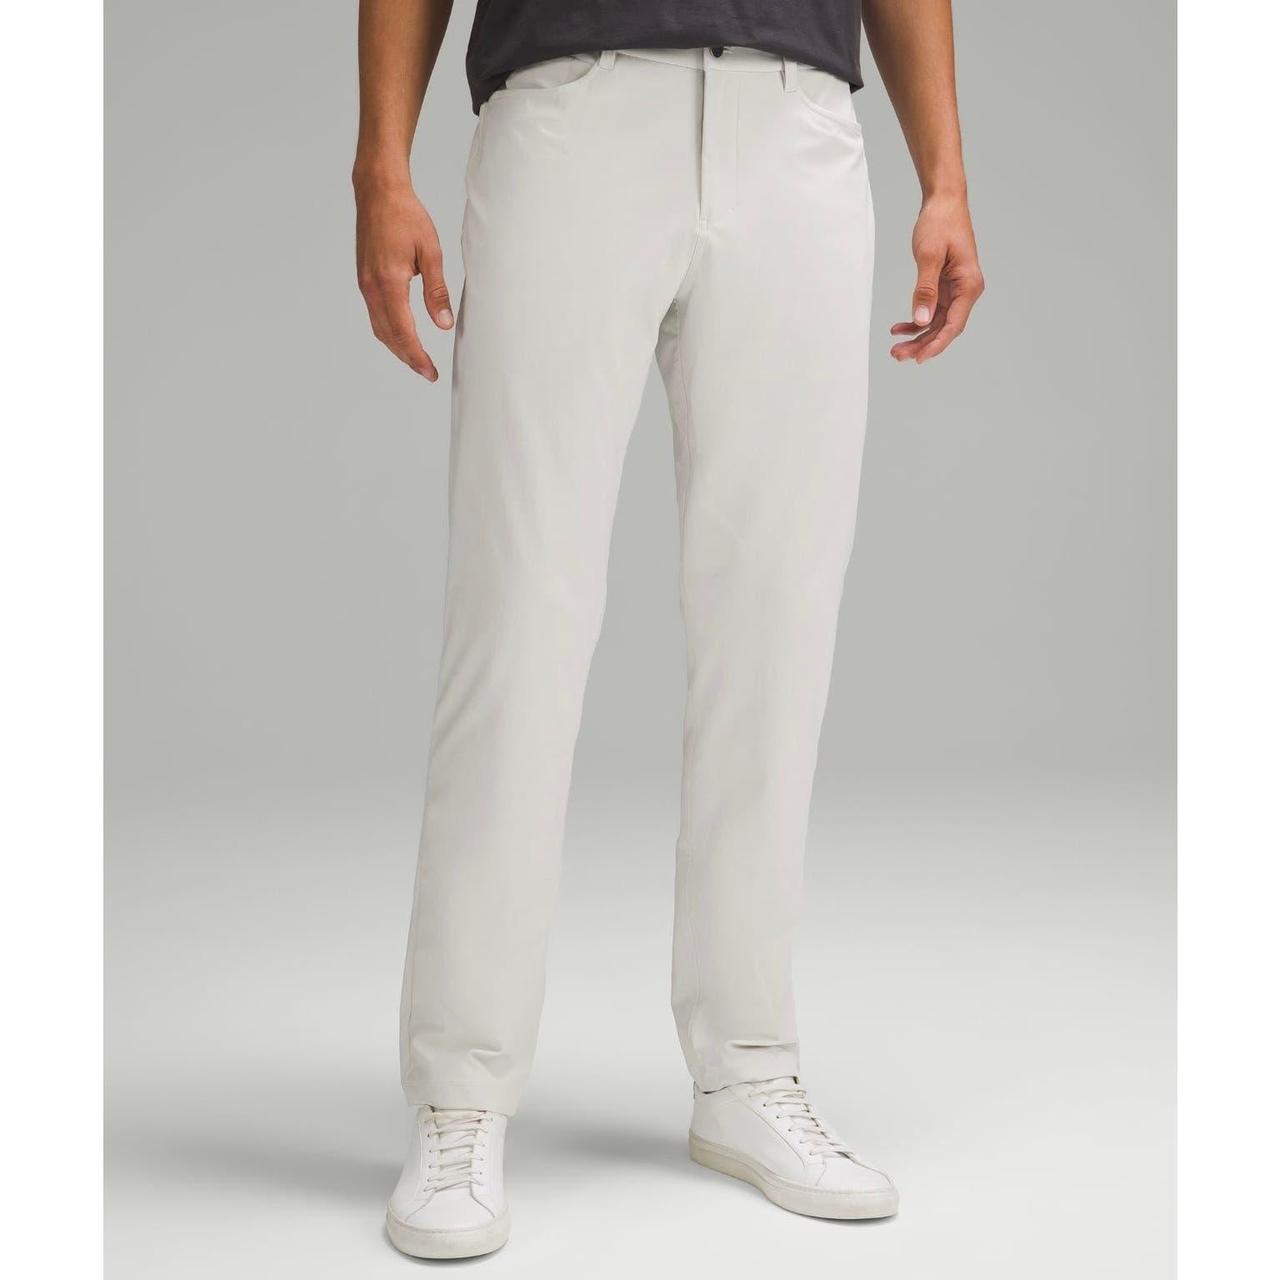 Buy lululemon ABC Pant Slim 34 Length - White (32) at